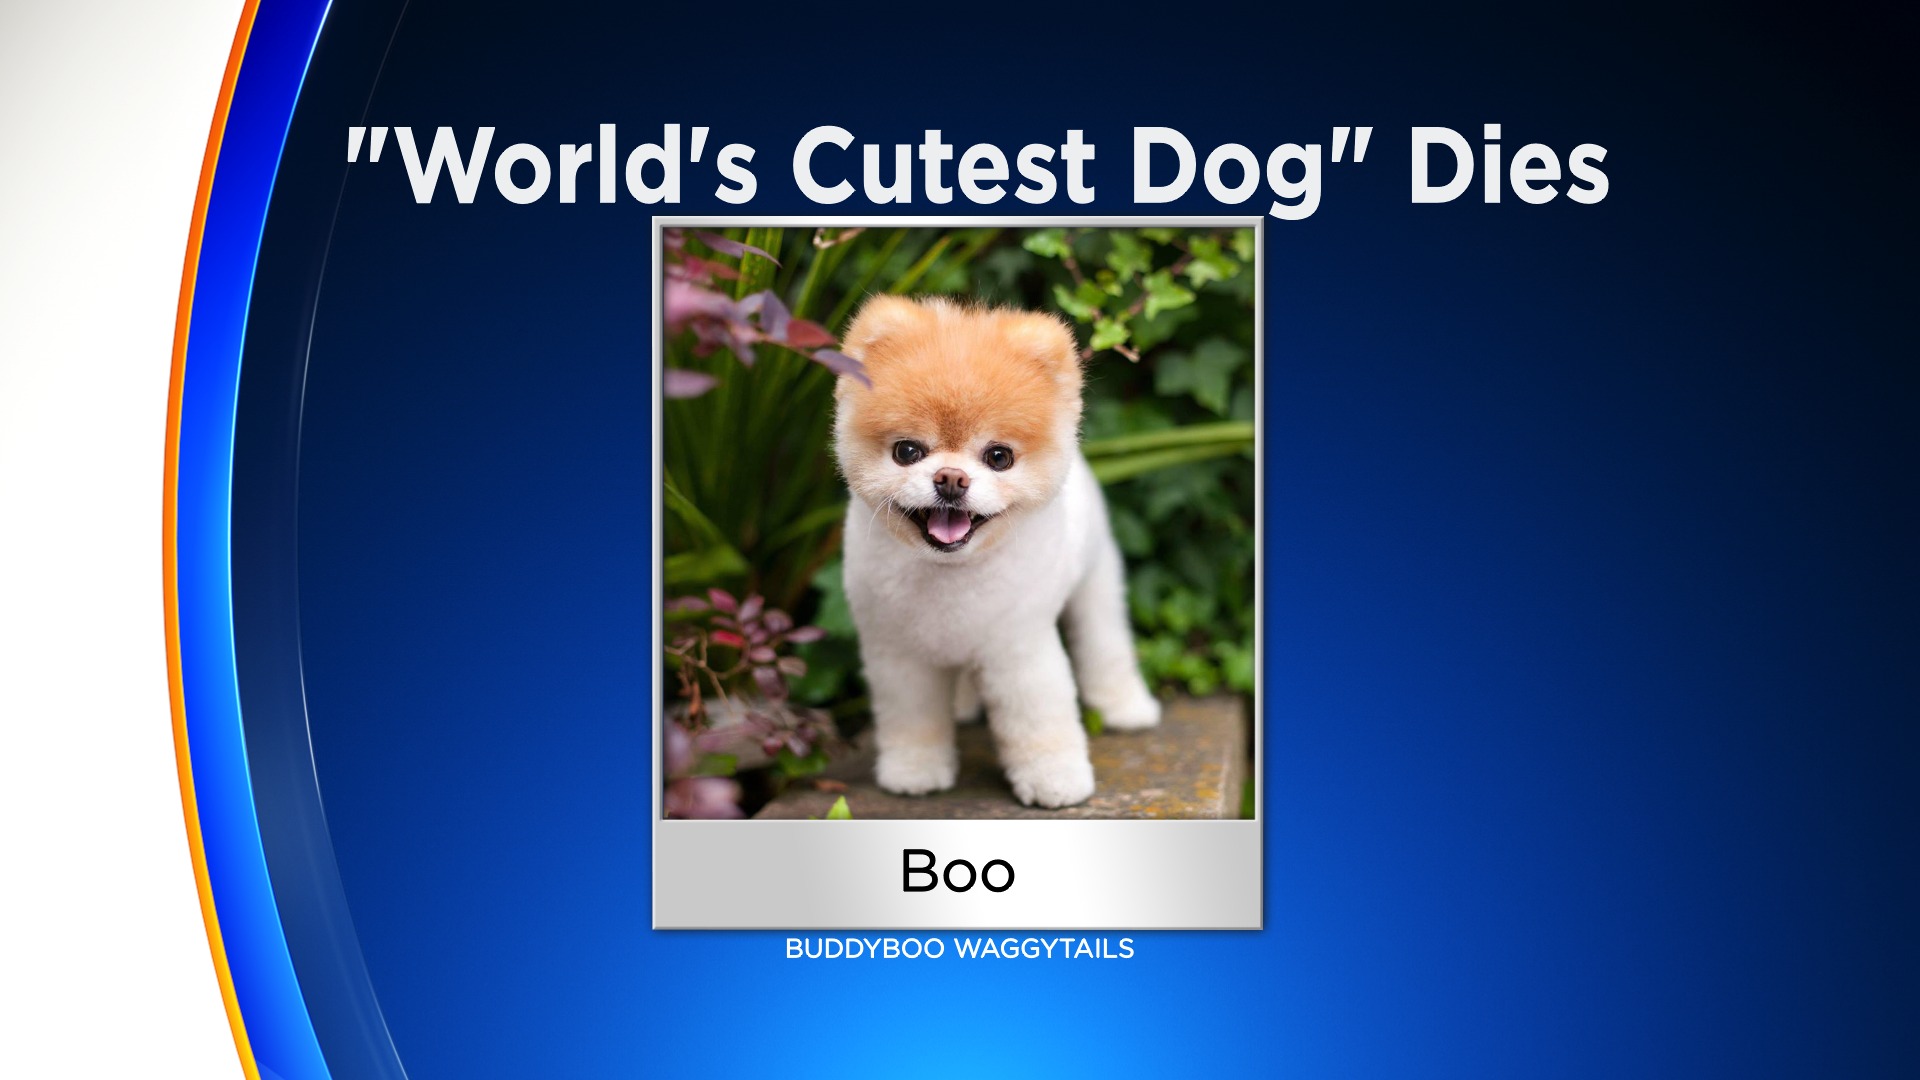 boo the cutest dog death